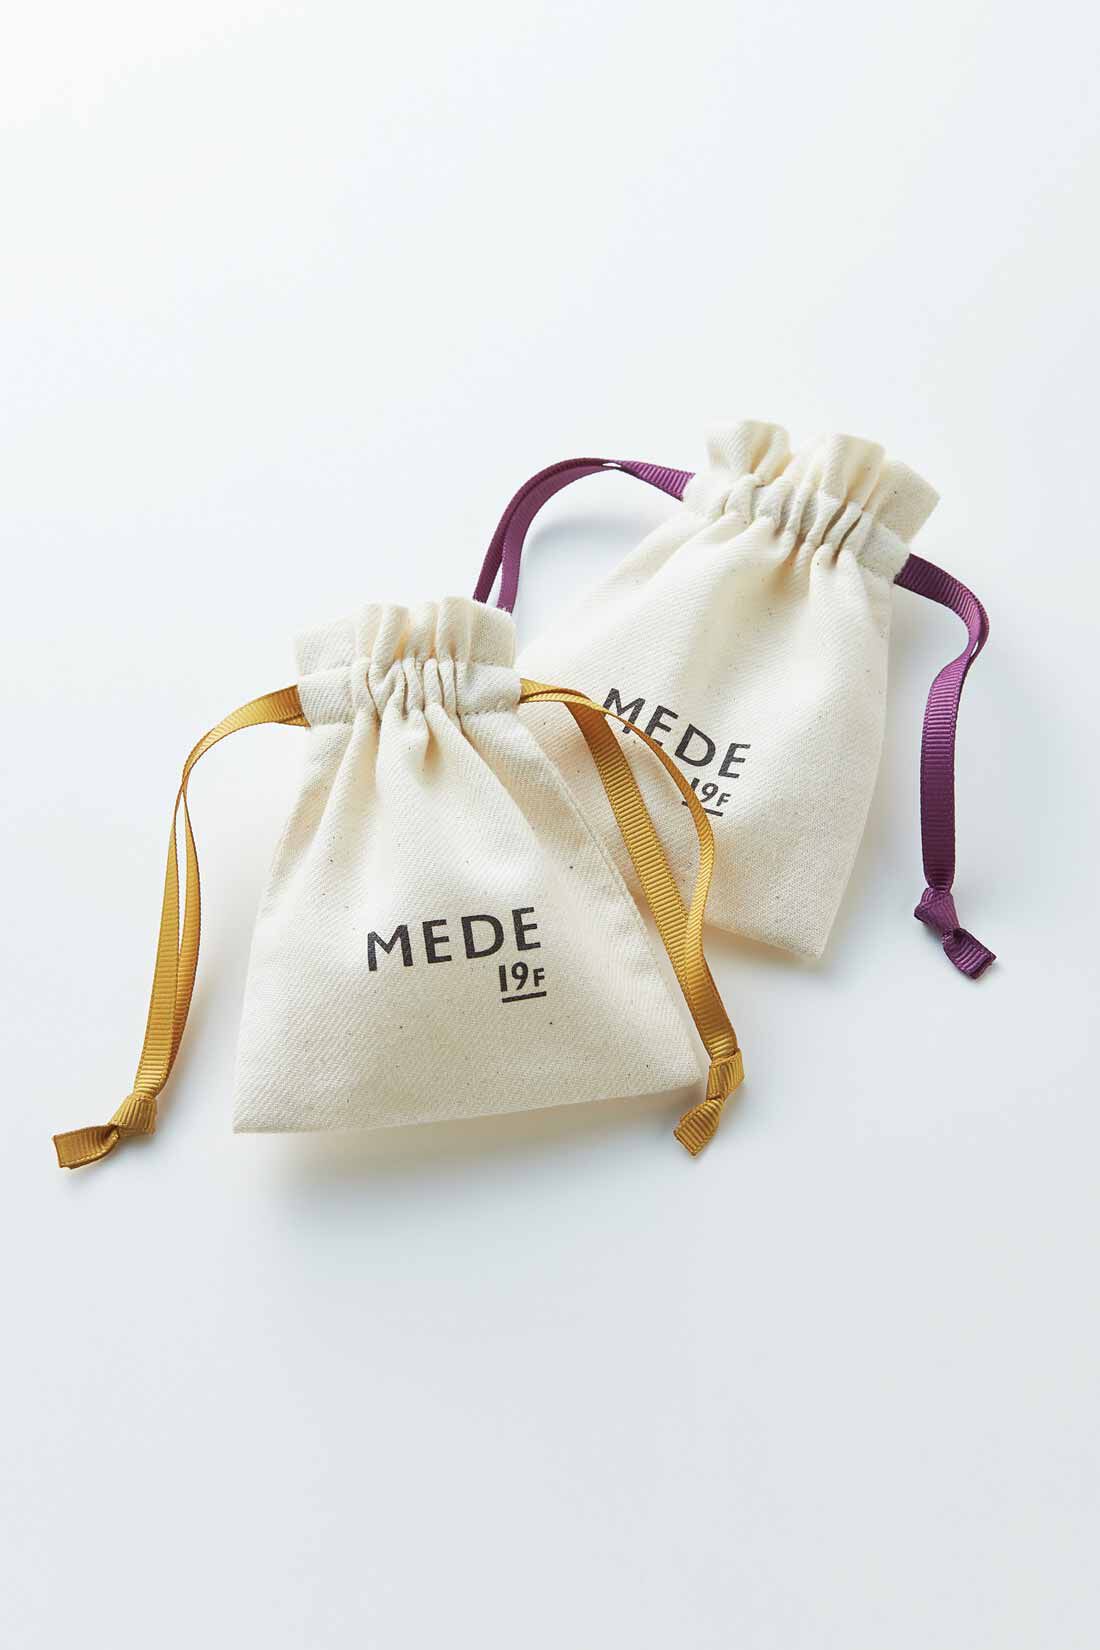 MEDE19F|YPAC for MEDE19F　フランス製陶器ボタンイヤリング type.12|MEDE19Fオリジナルきんちゃくに入れてお届けします。